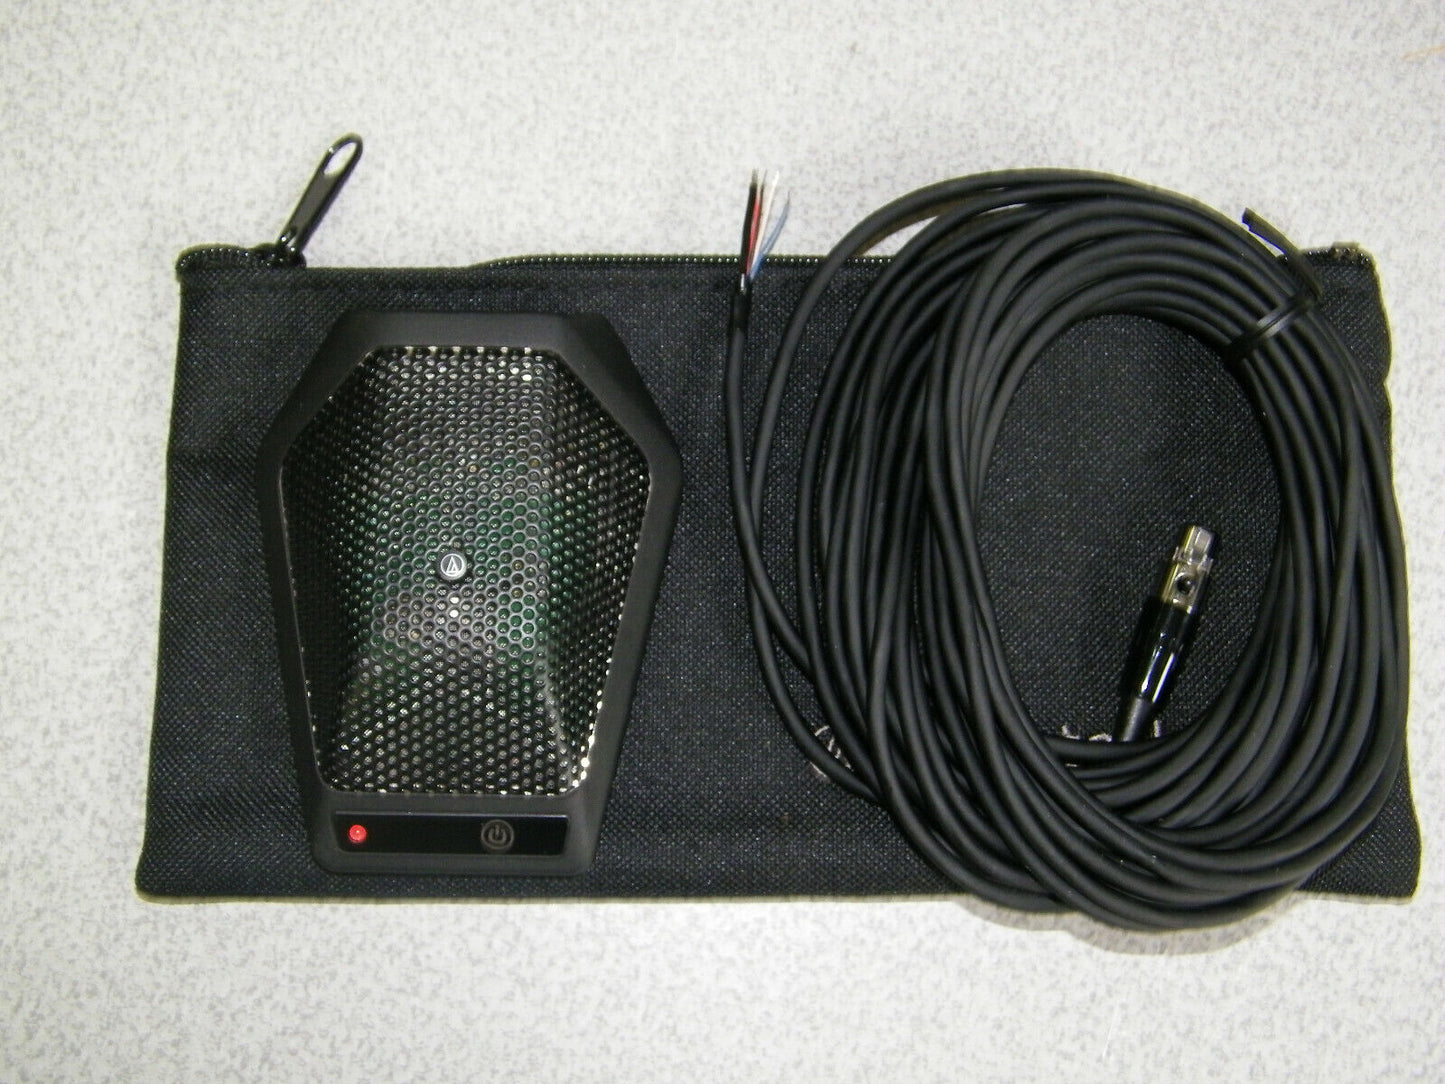 Audio-Technica U891RCx Cardioid Condenser Boundary Mic w/ Remote Switch